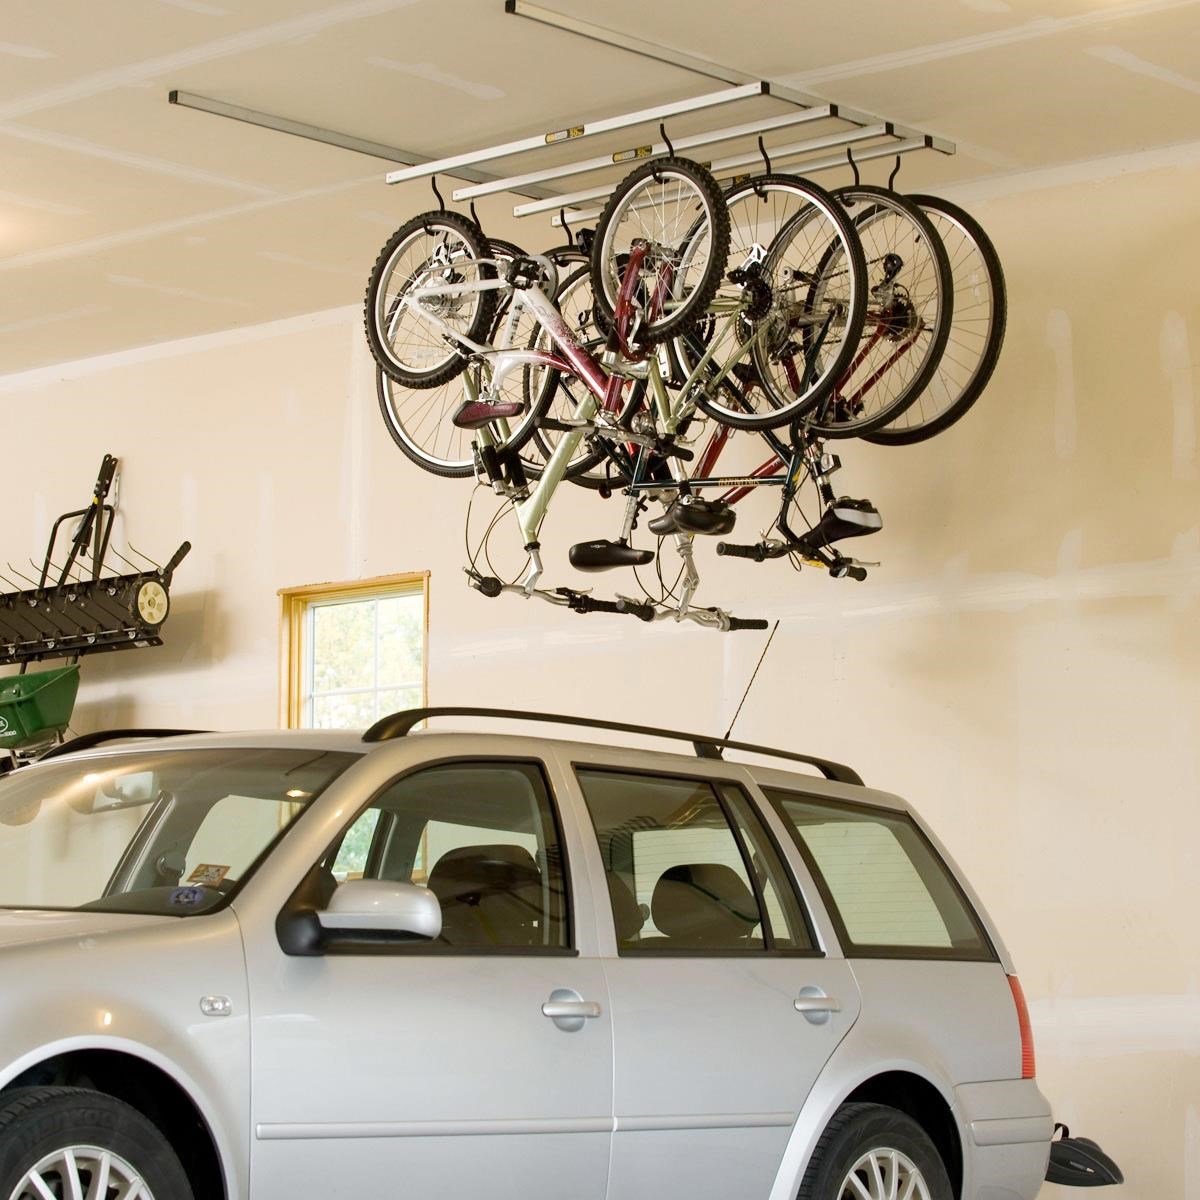 Saris Parking Cycle Glide Ceiling Mount Storage Rack - 4 Bikes product image